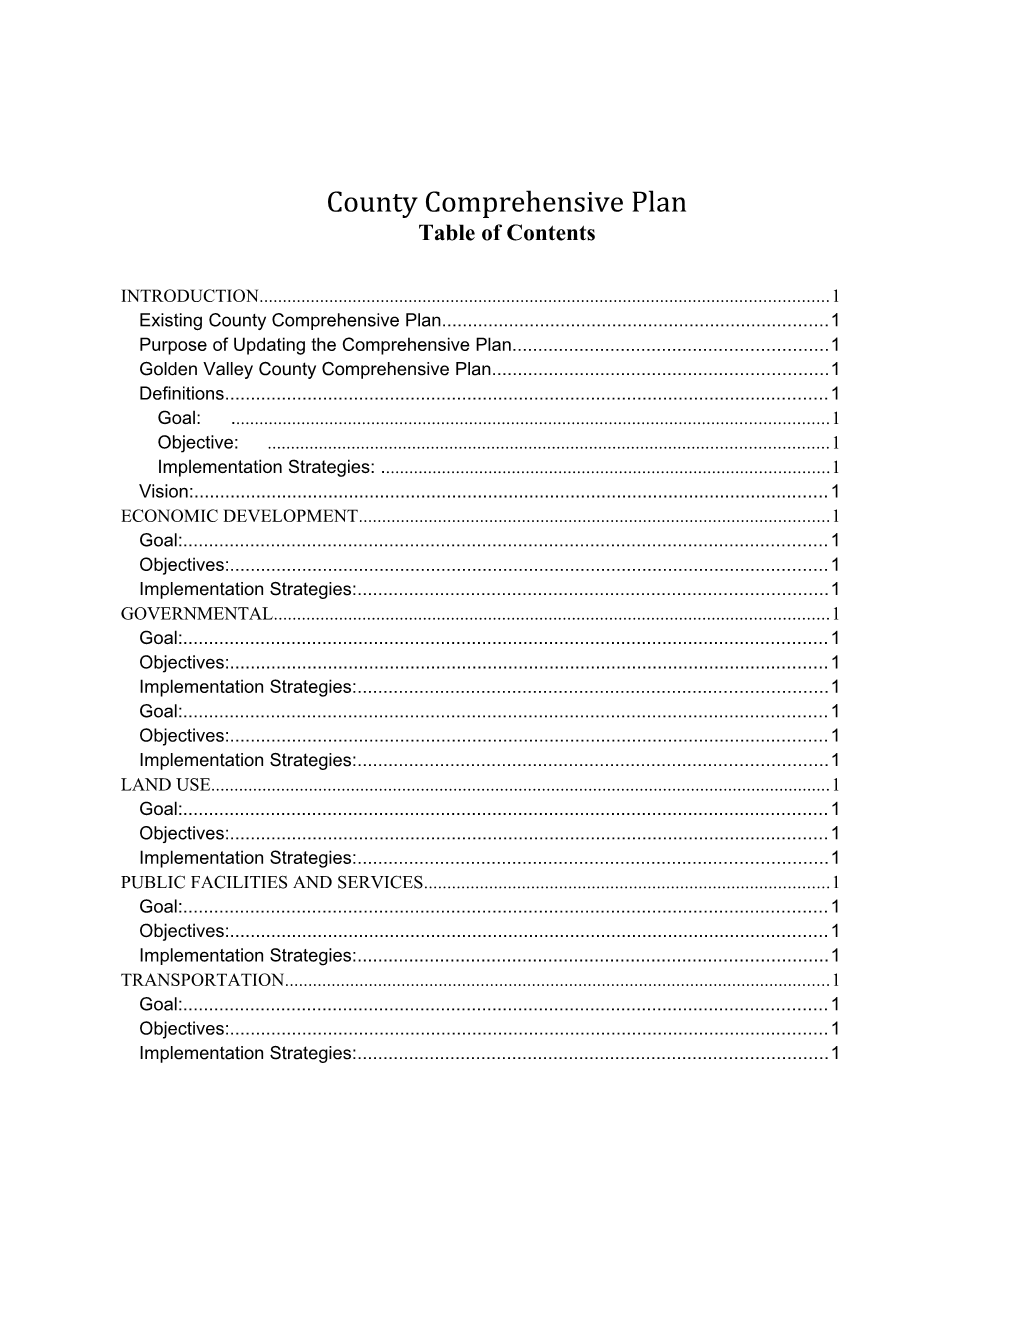 Olden Valley County Comprehensive Planplanupdate: 2012